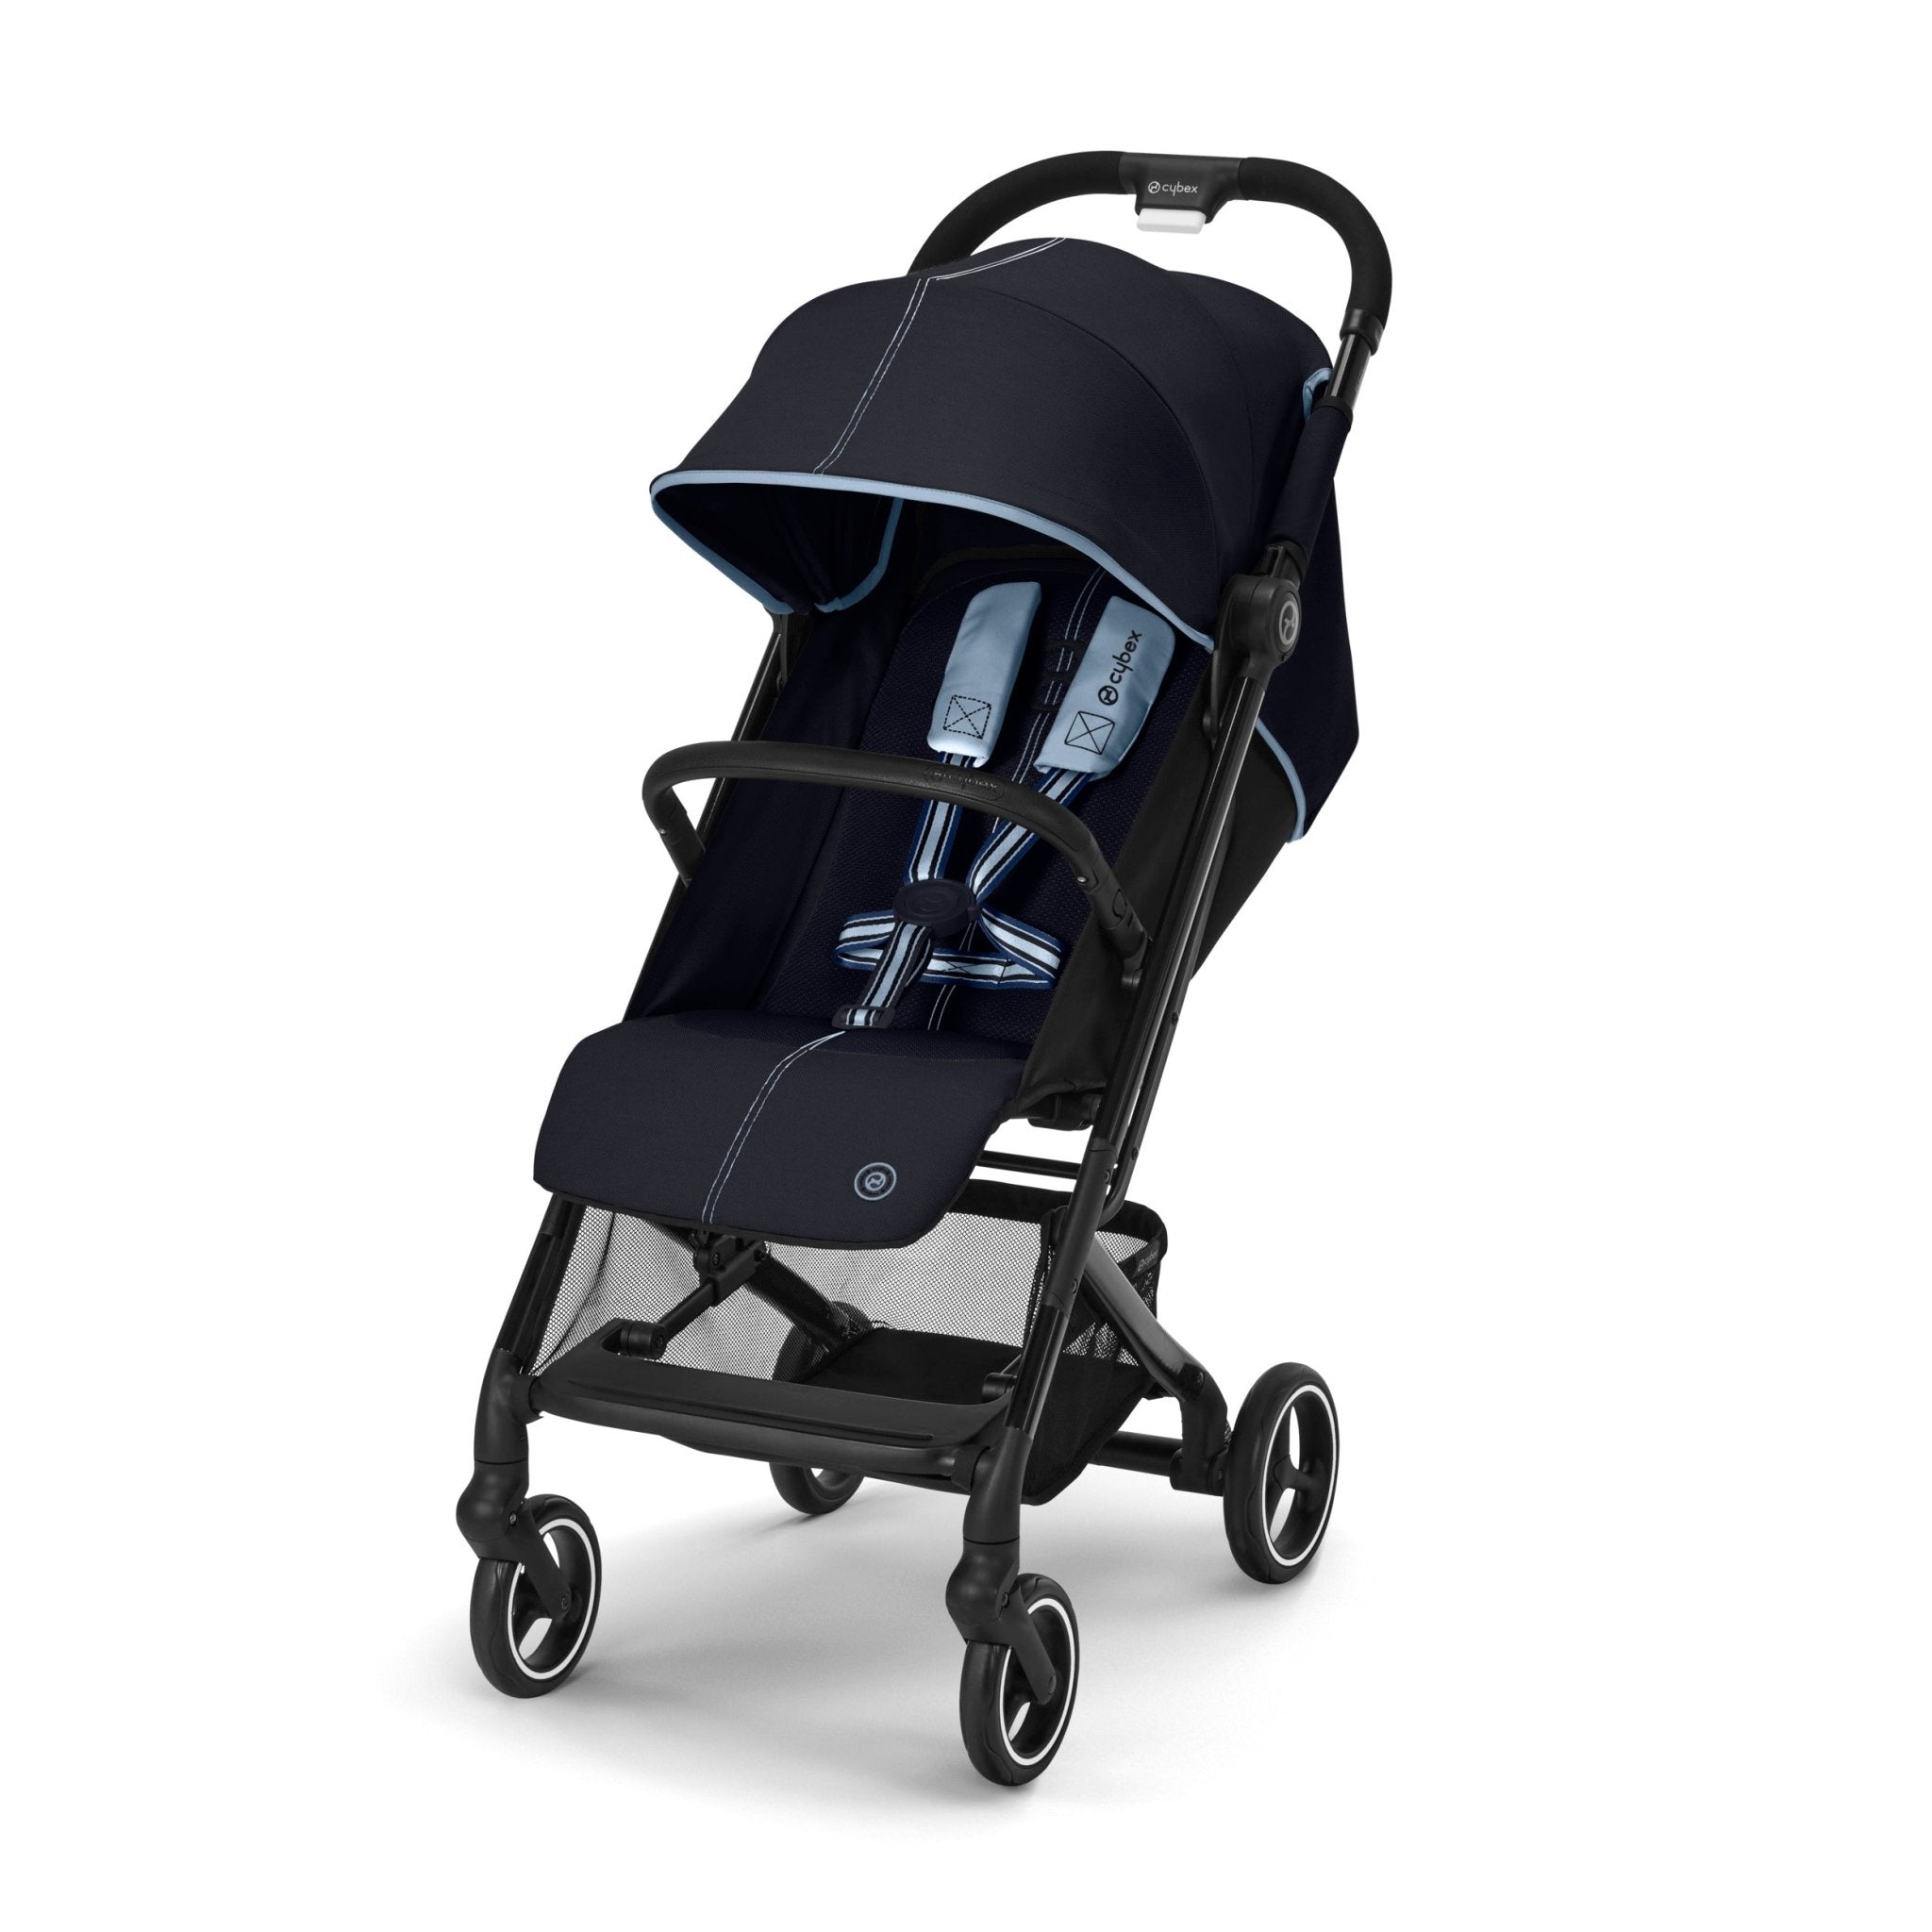 Cybex Beezy 2 Stroller - ANB Baby -$300 - $500